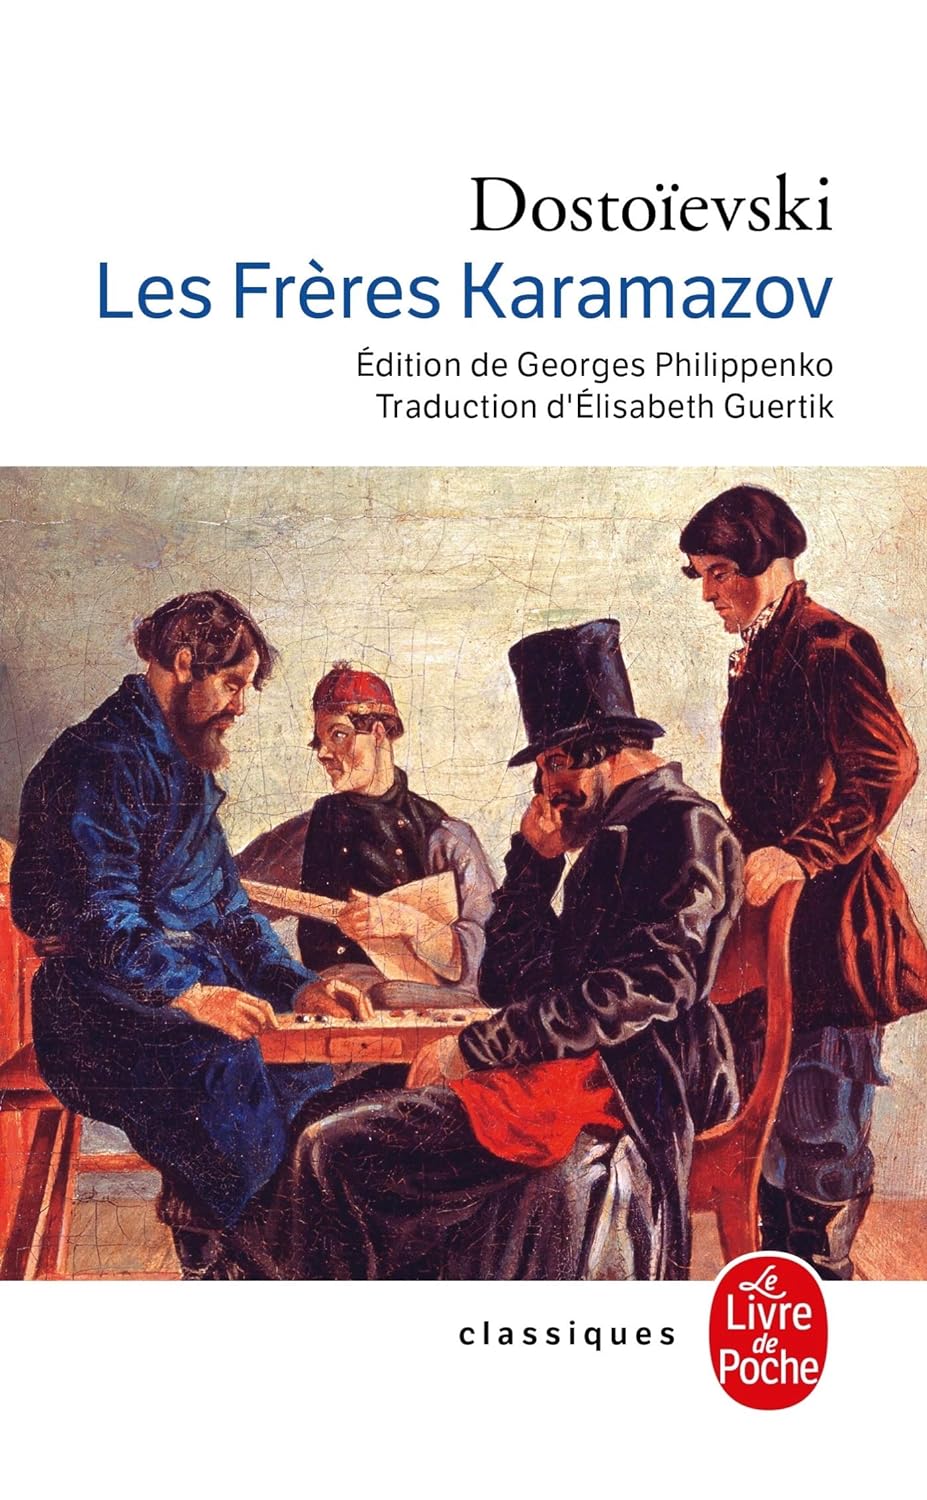 Fyodor Dostoevsky: Les frères Karamazov (French language, 1994)